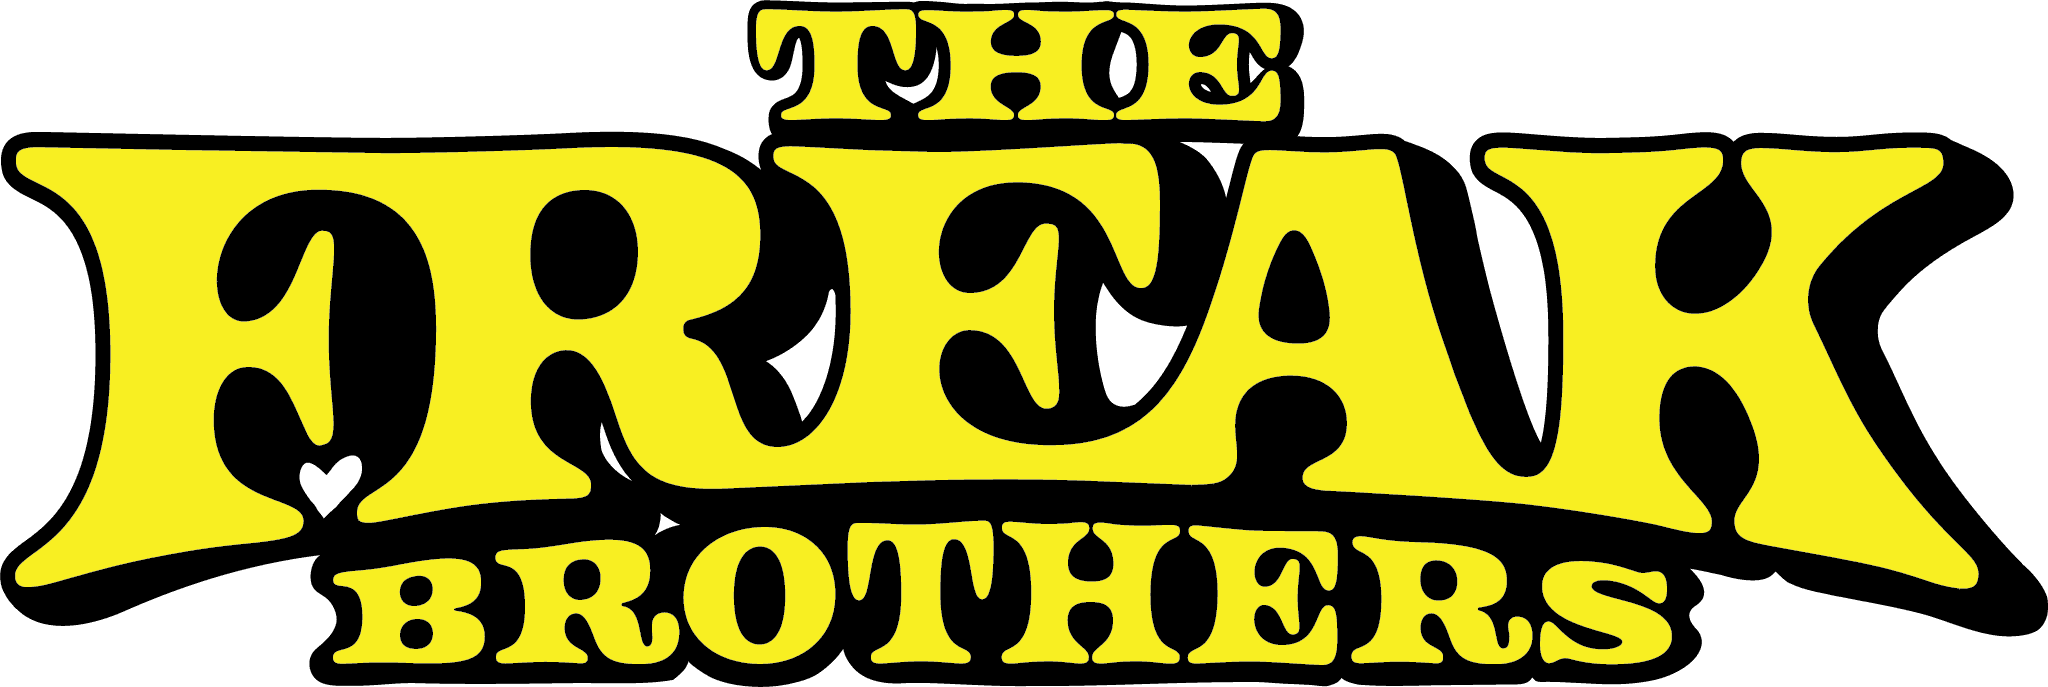 The Freak Brothers logo